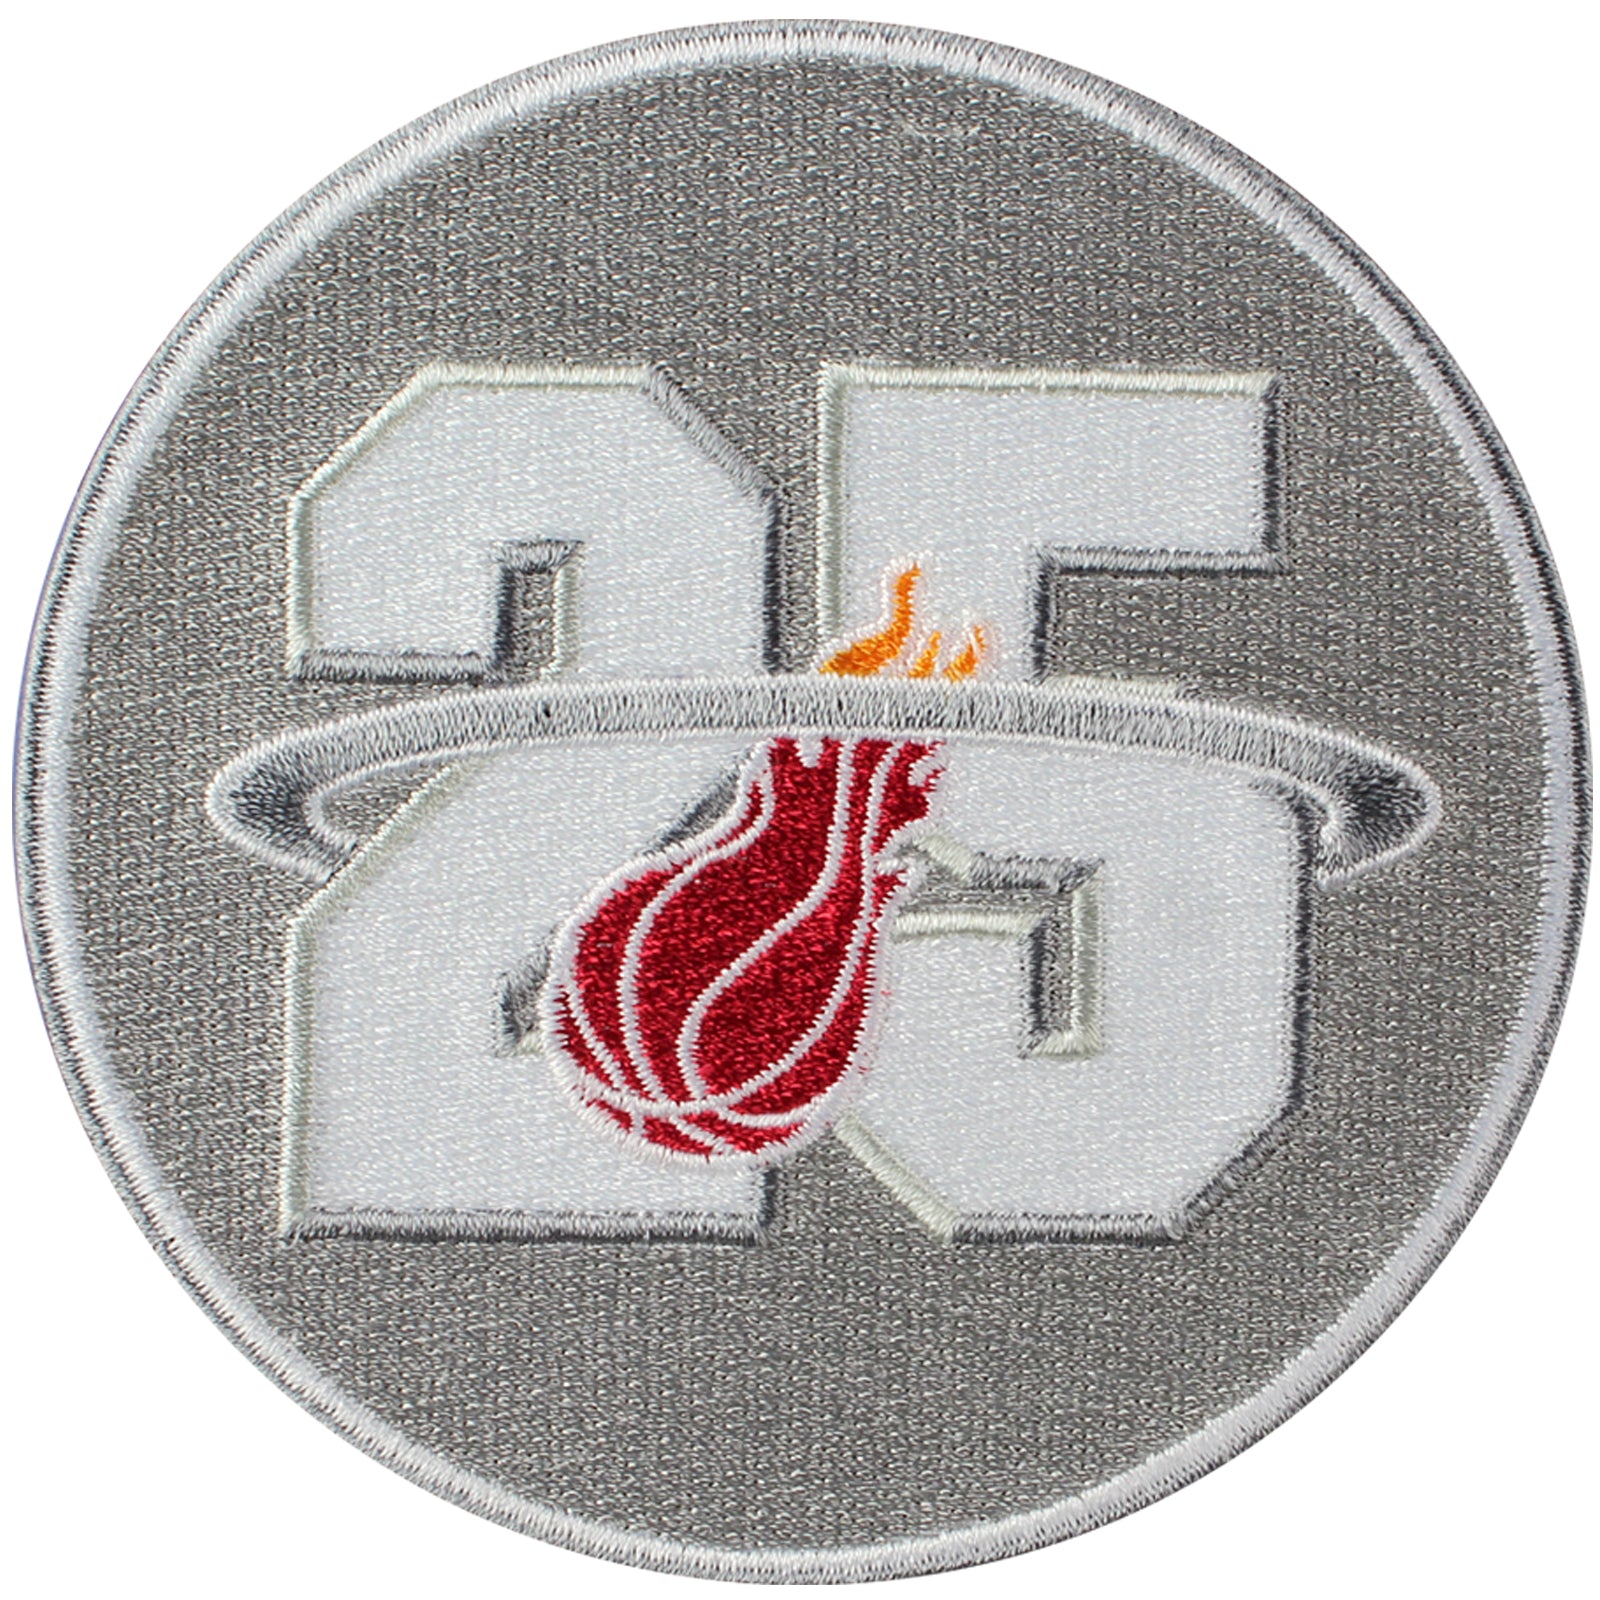 Miami Heat 25th Anniversary Season Logo Jersey Patch 4" Version (2012-13) 